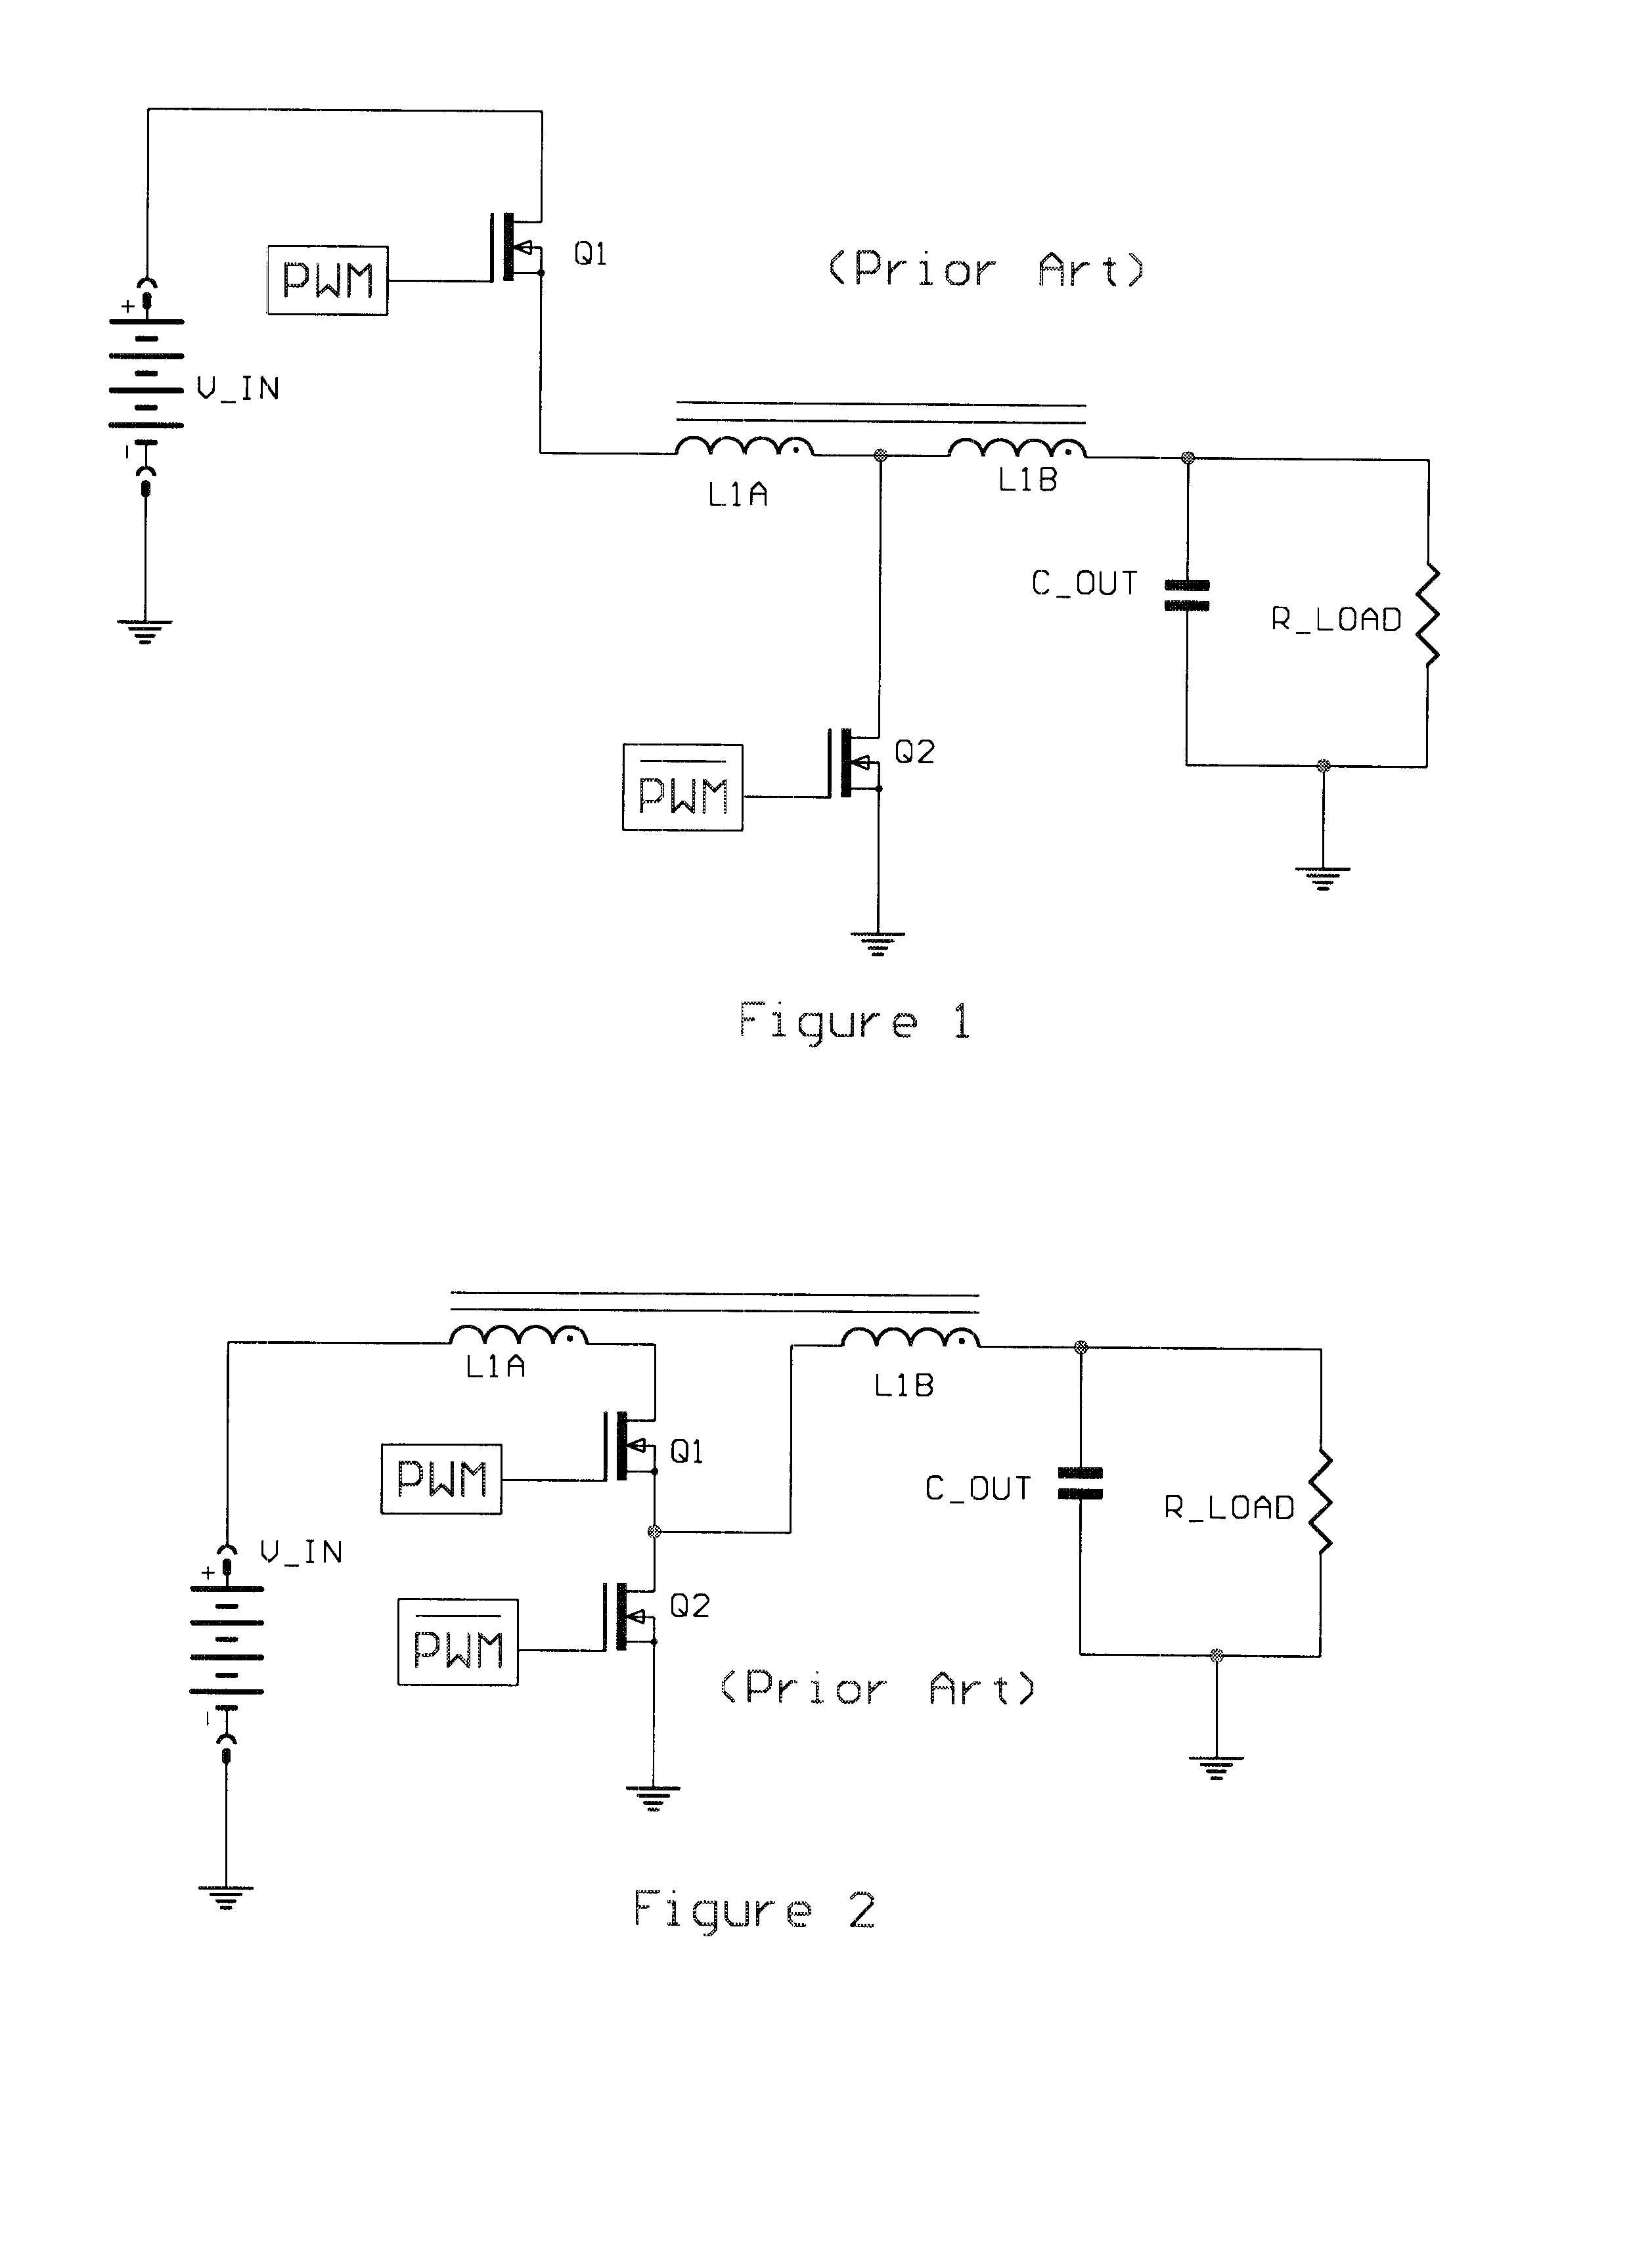 Zero voltage switching power conversion circuits